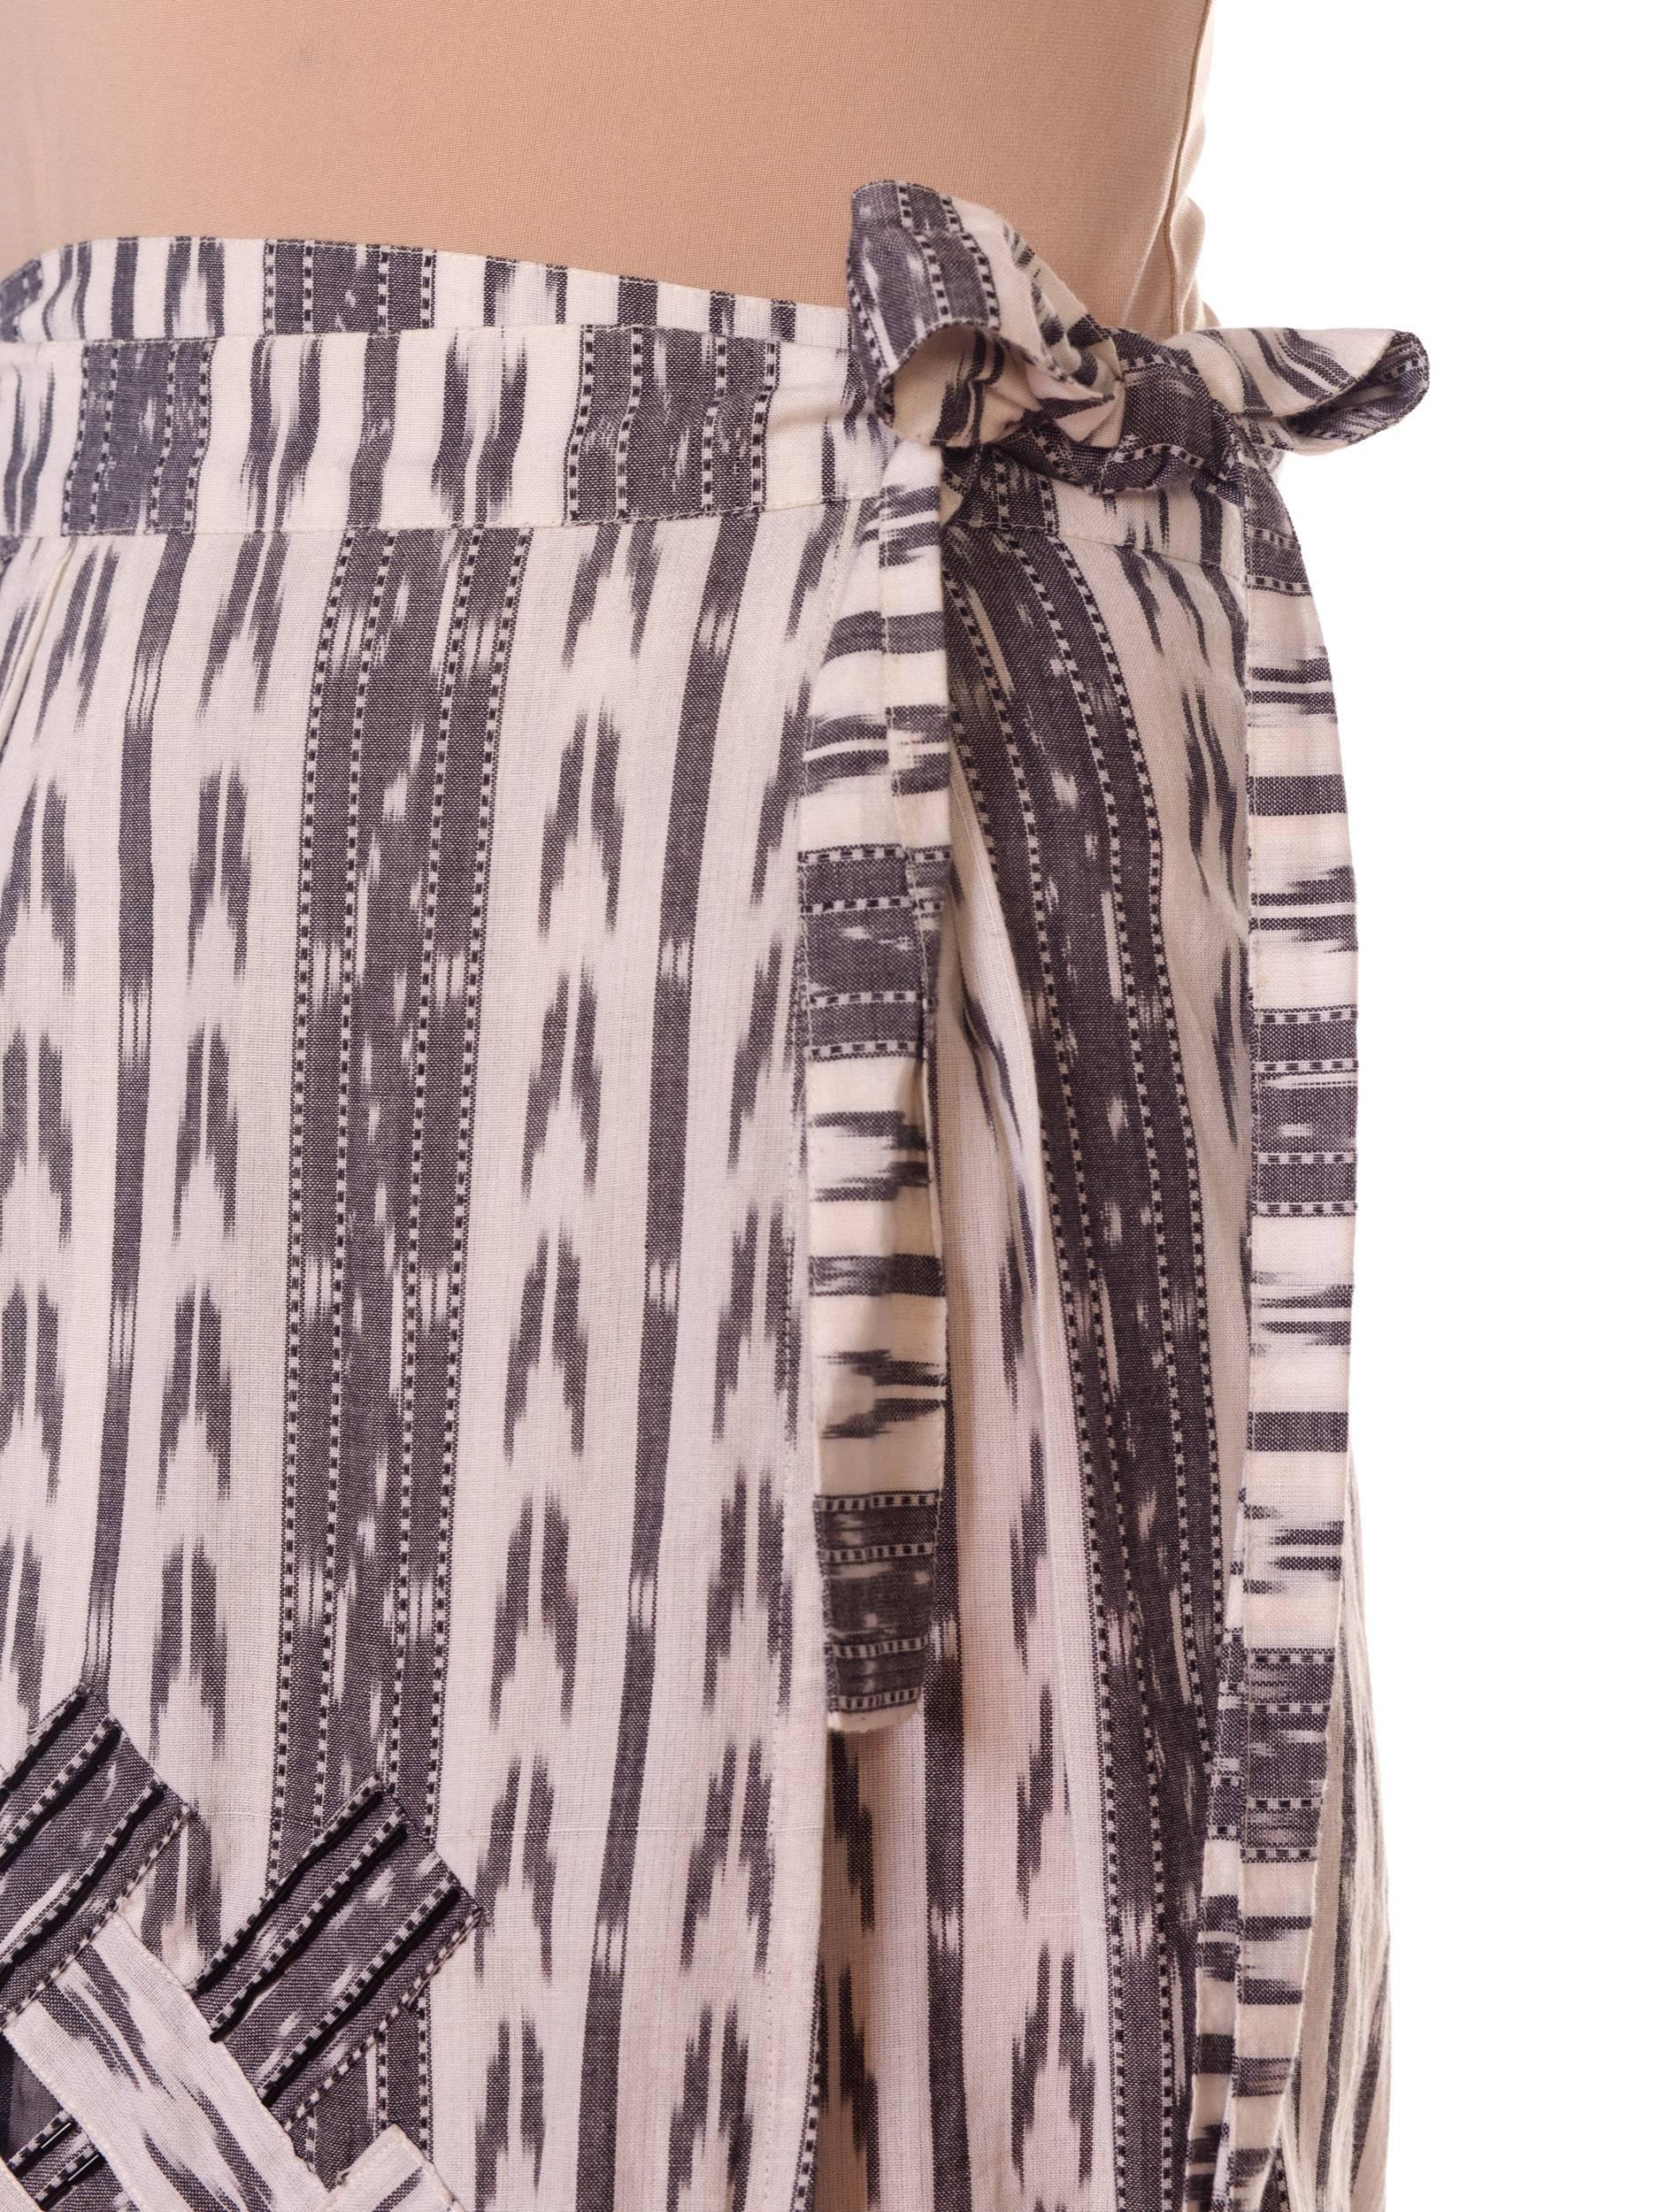 Oscar De La Renta Cotton Ikat Skirt with Appliqué and Sheer Panels 4